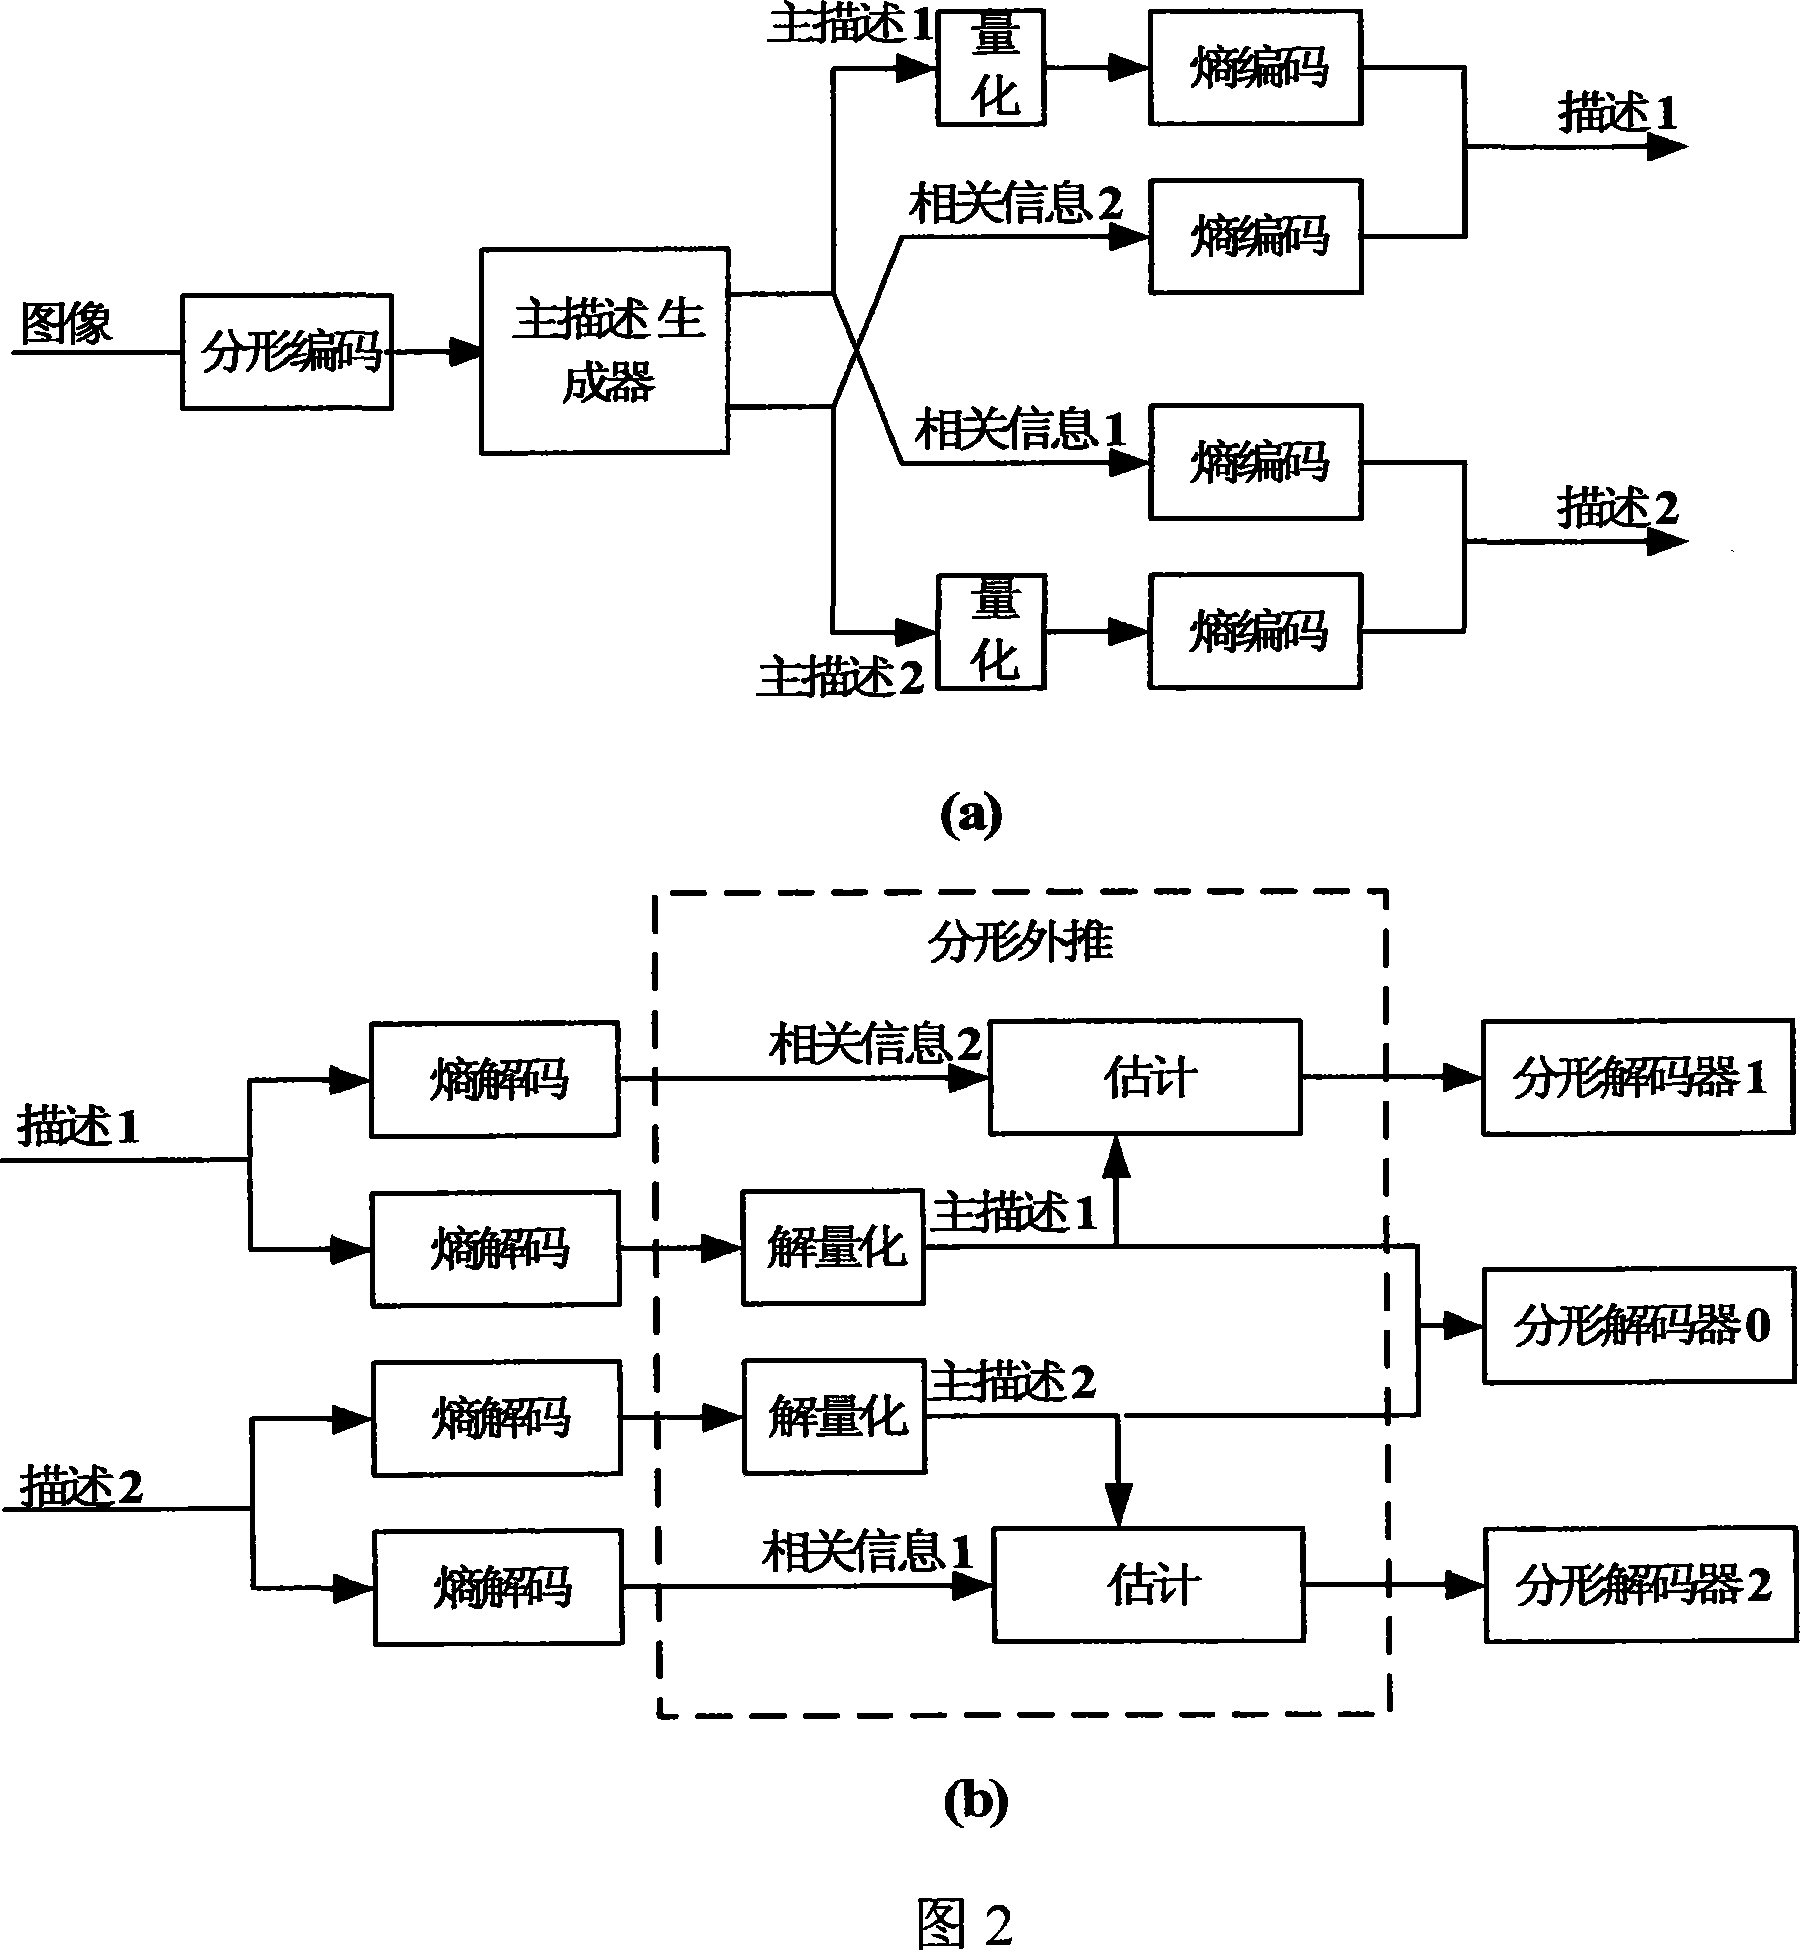 A multi-description coding method based on alternate function system